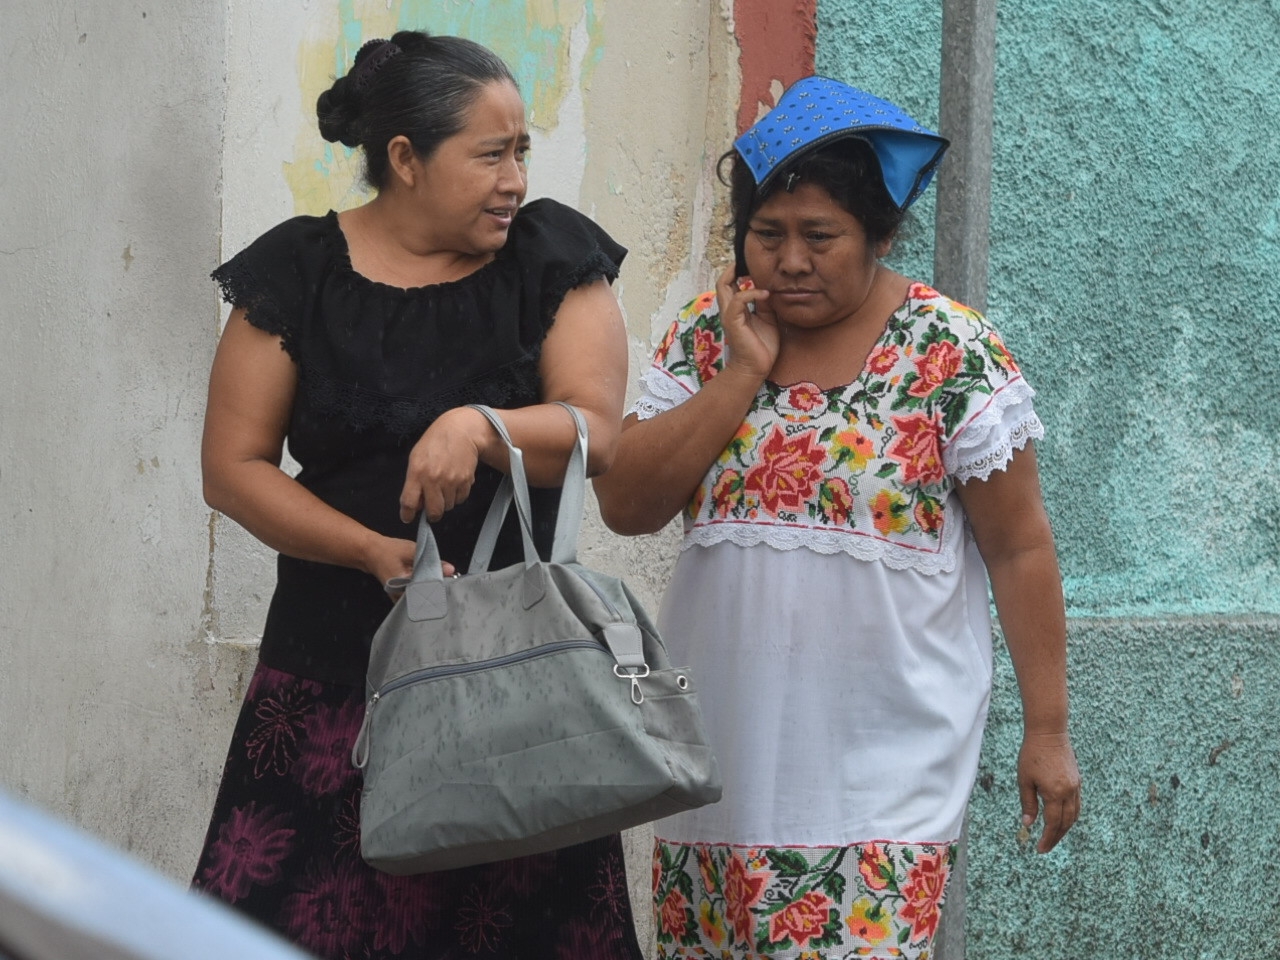 Seis de cada 10 yucatecos han sido discriminados por sus apellidos mayas, revelan